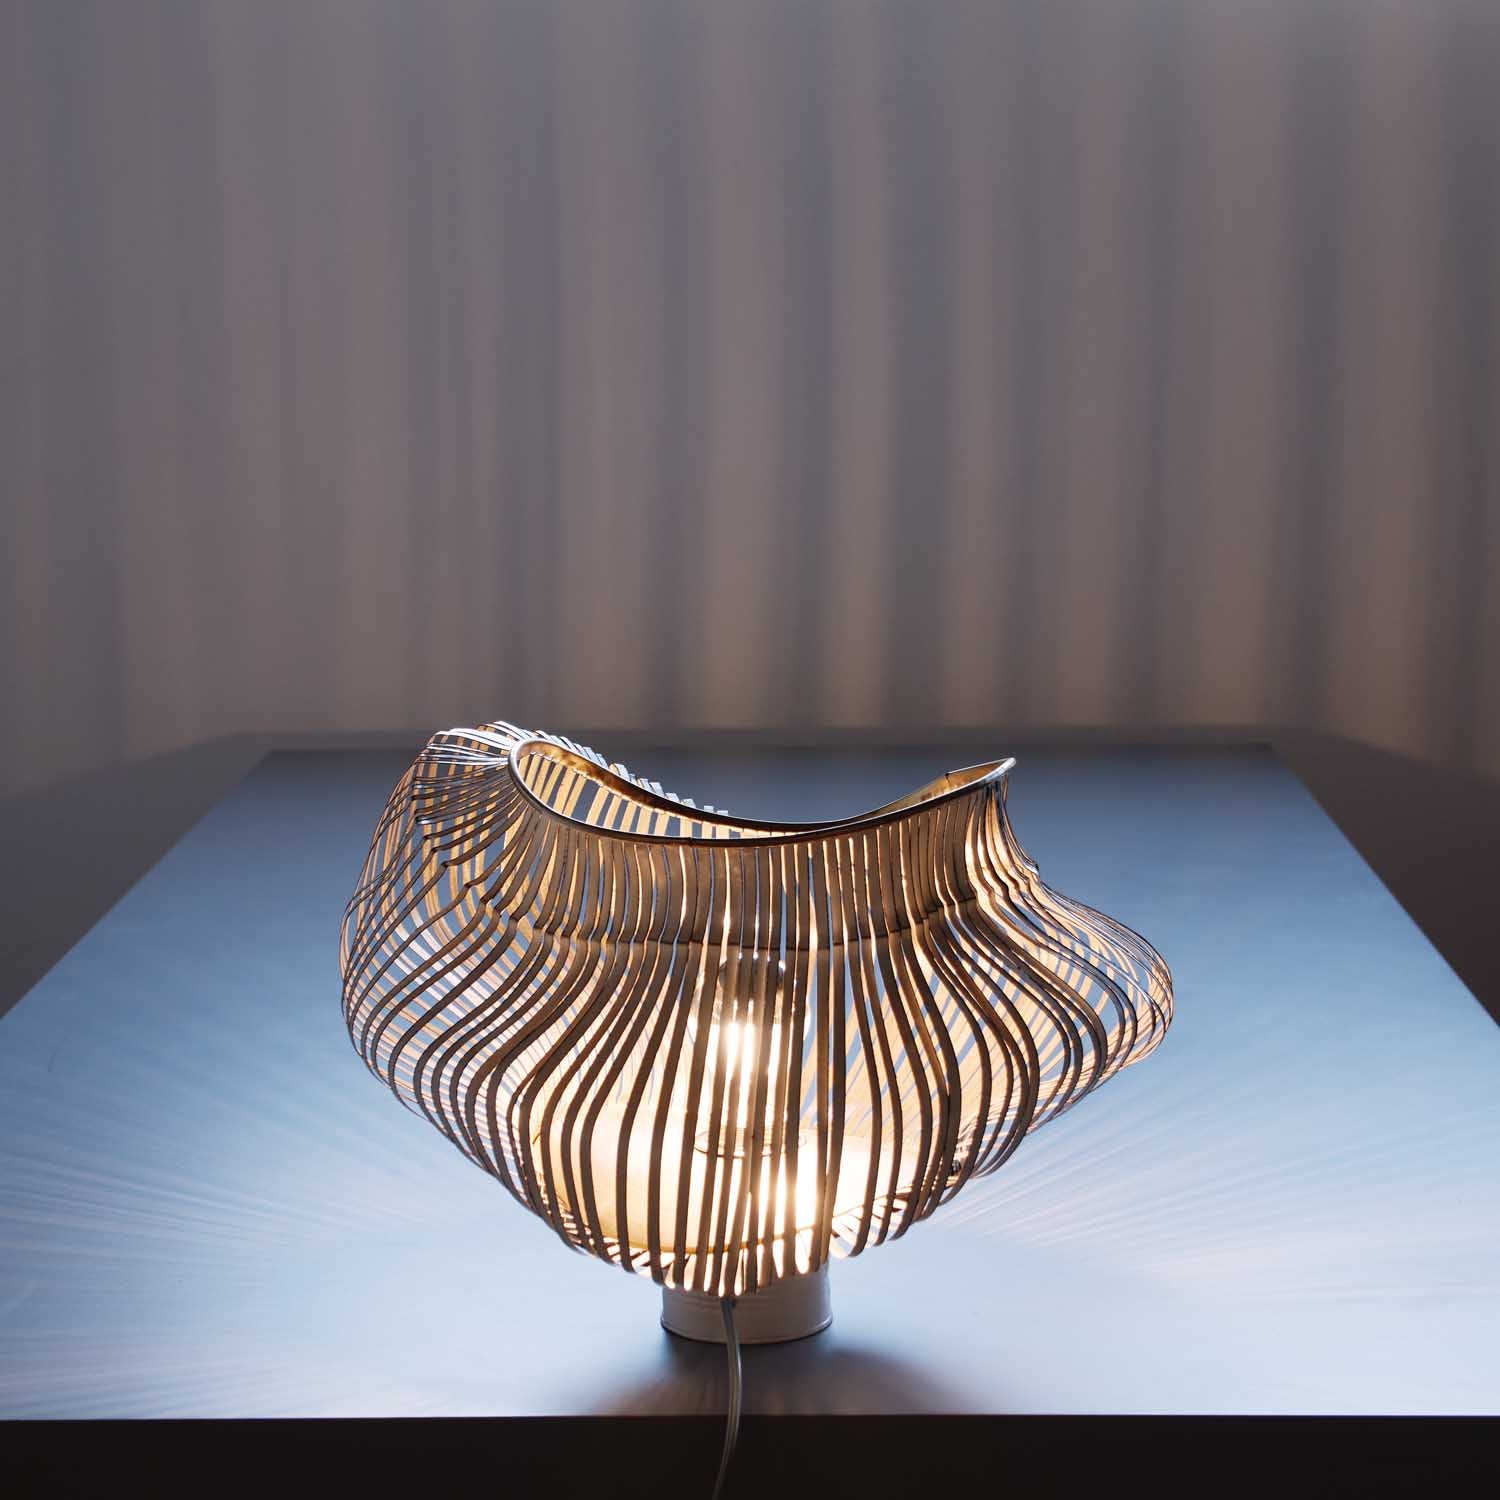 Warm White Exterior: Inviting Table Lamp Aesthetics